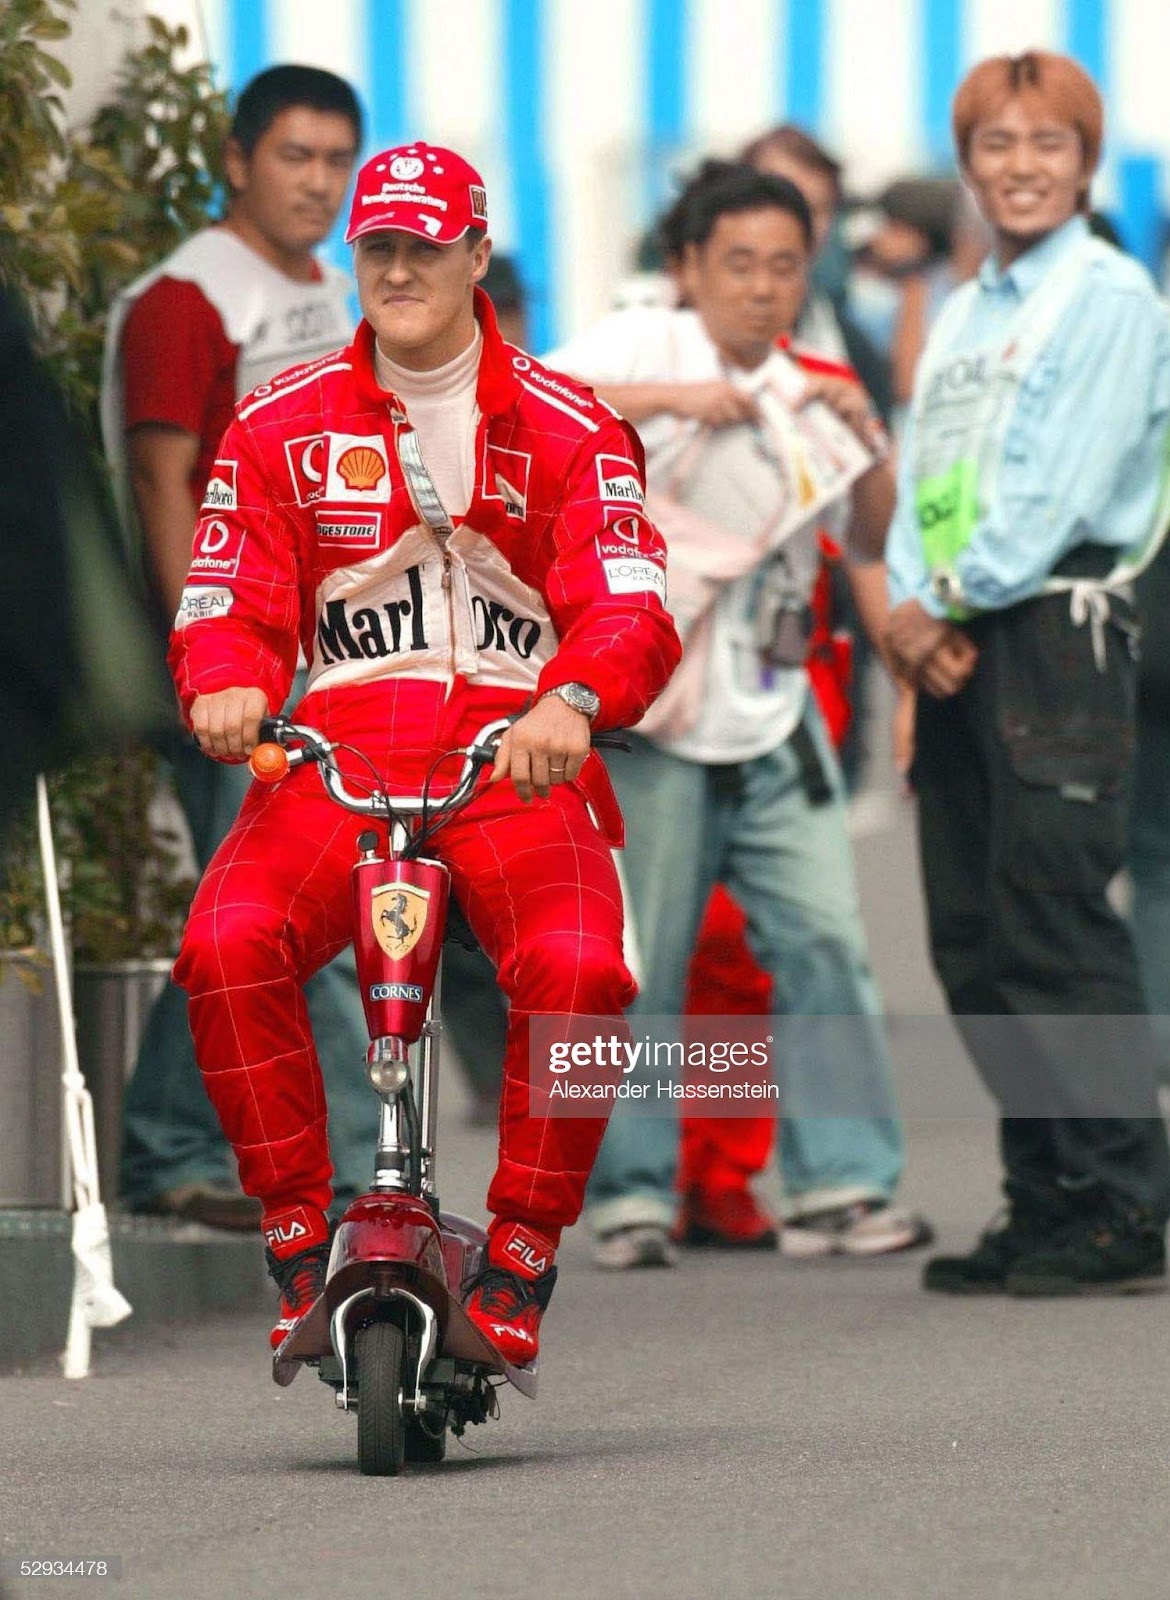 2003 Japanese Grand Prix, Suzuka. Michael Schumacher, Ferrari, drives through the pits on a scooter. 